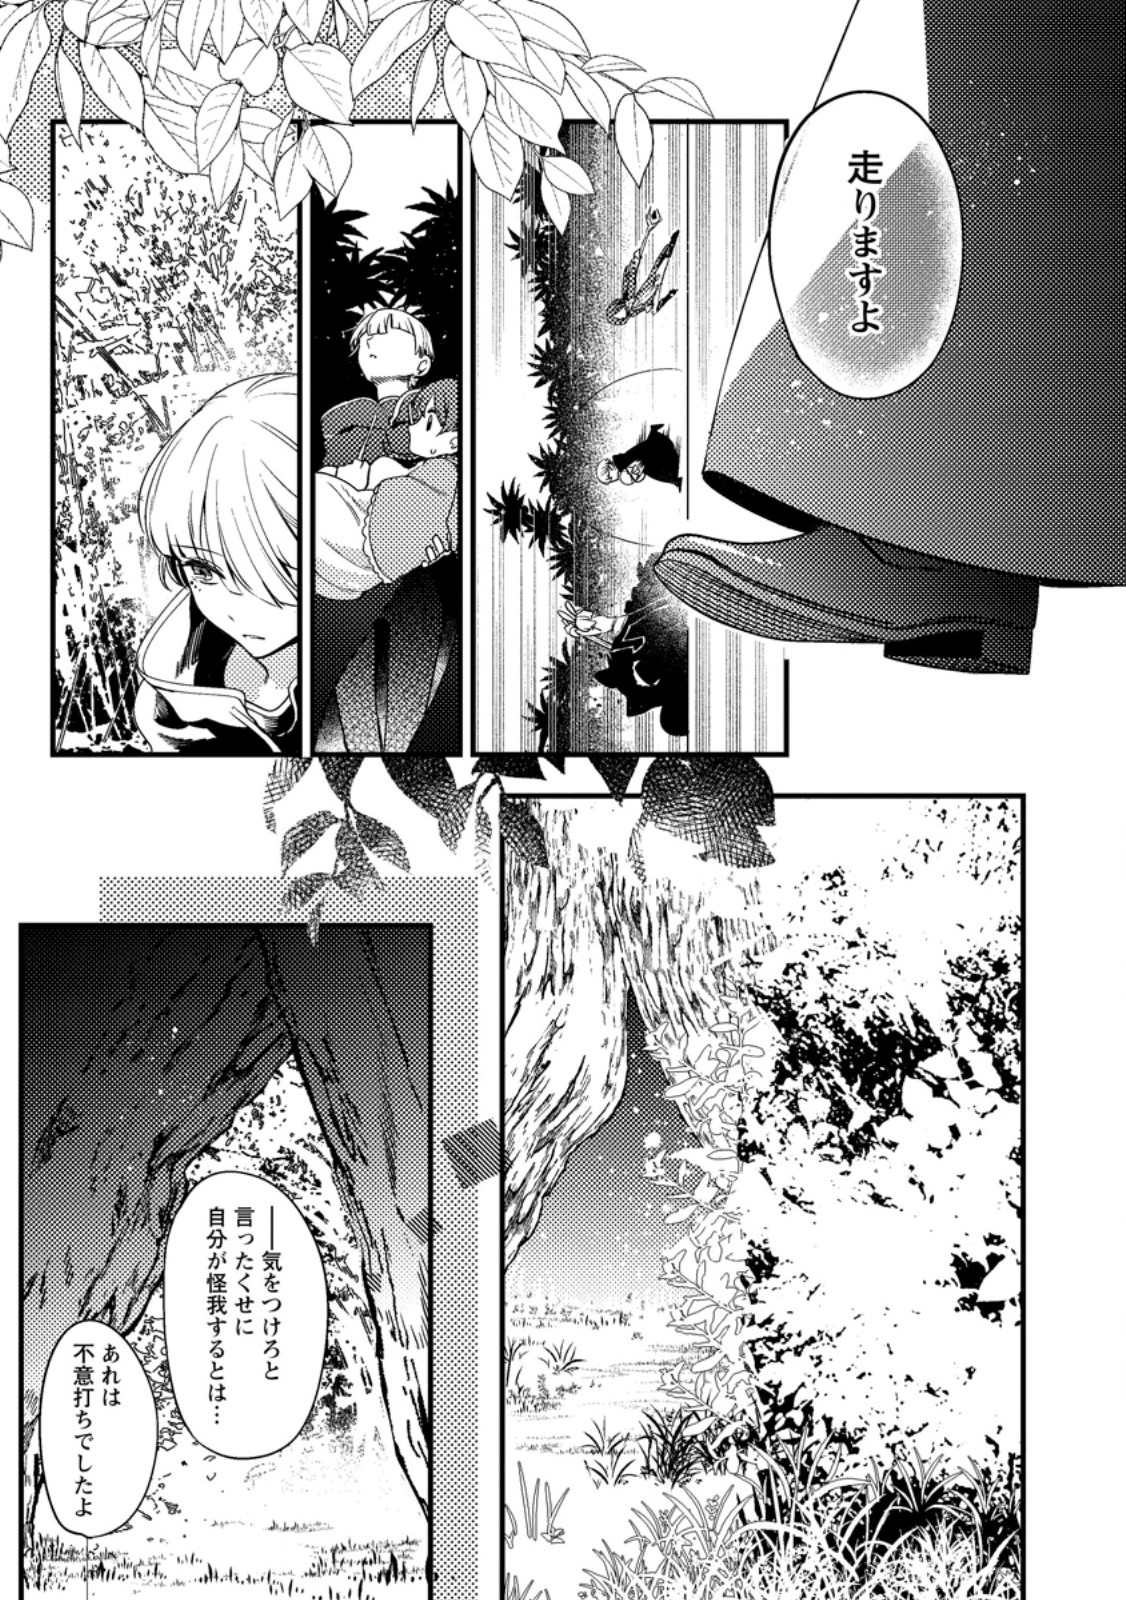 Hakoniwa no Yakujutsushi - Chapter 38.3 - Page 3